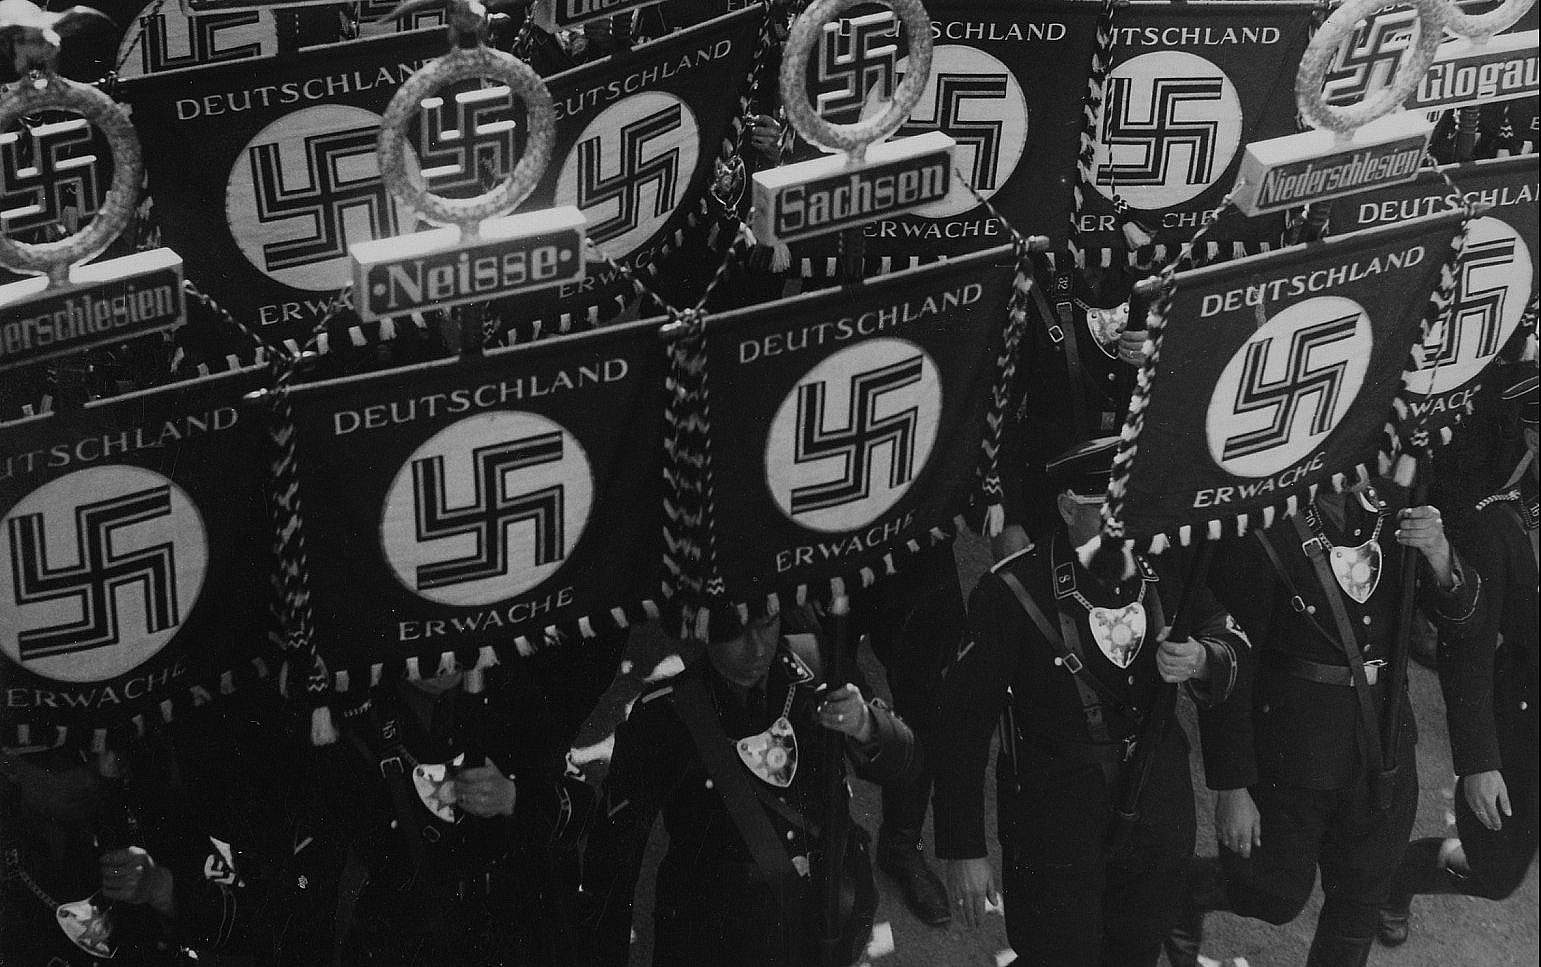 Third Reichs Propaganda In Nazi Germany